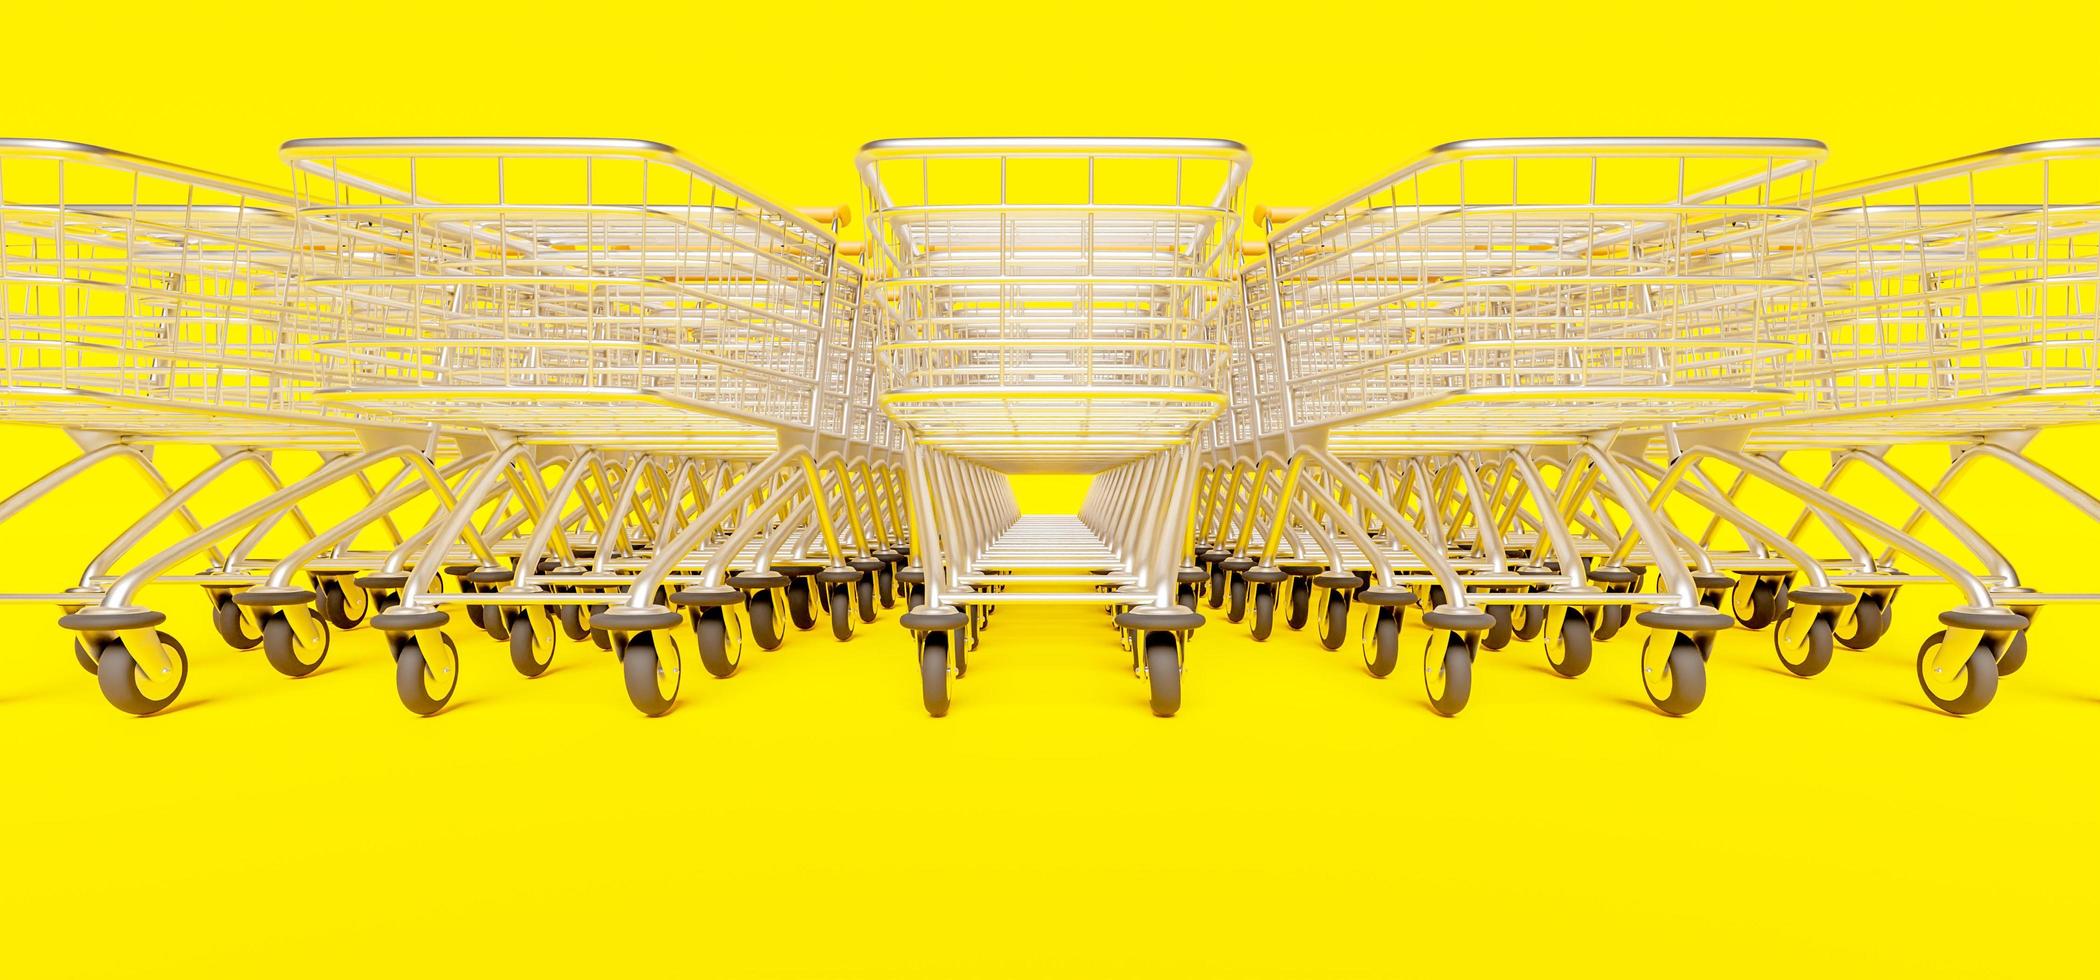 Close-up de fila de carros de compras apilados sobre fondo amarillo, 3D Render foto